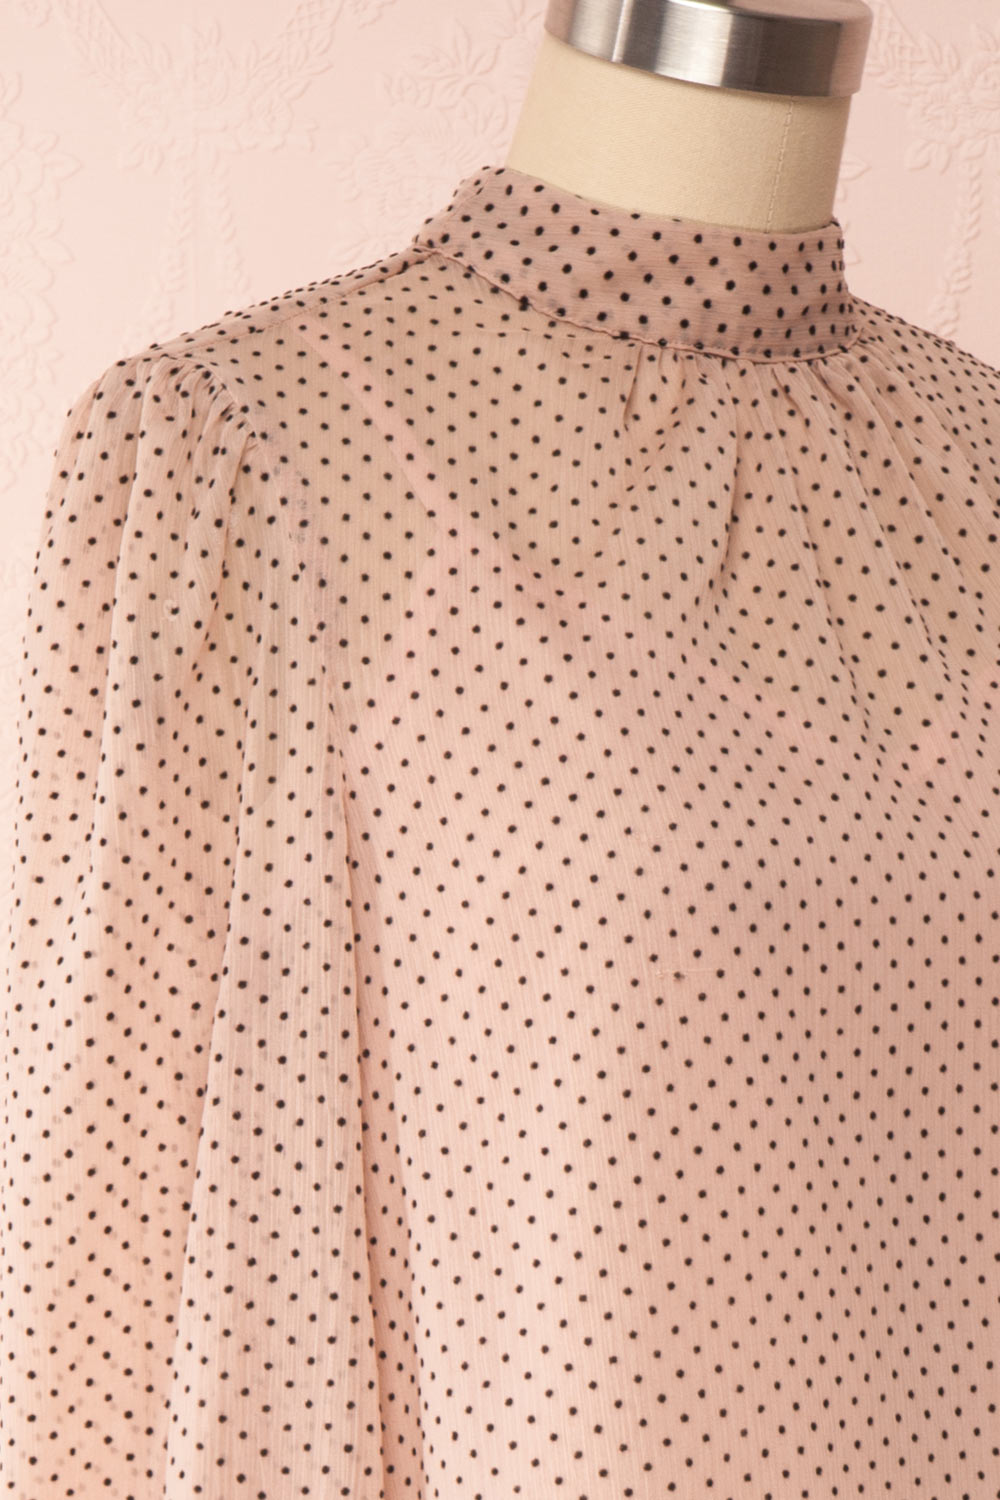 Tajimi Pink Polkadot Long Sleeved Blouse side close up | Boutique 1861